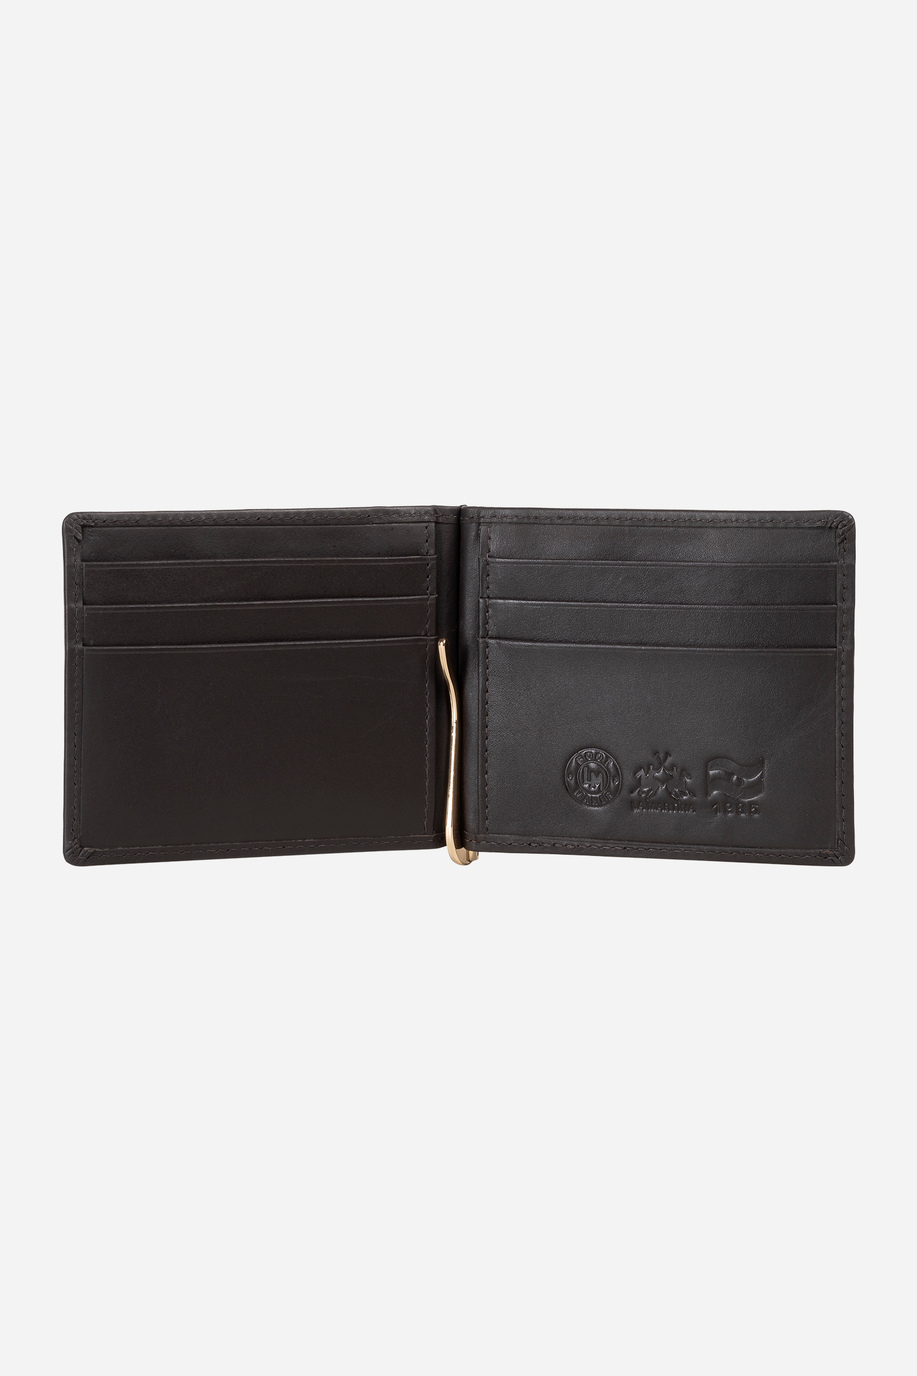 Men leather wallet in solid colour - test | La Martina - Official Online Shop